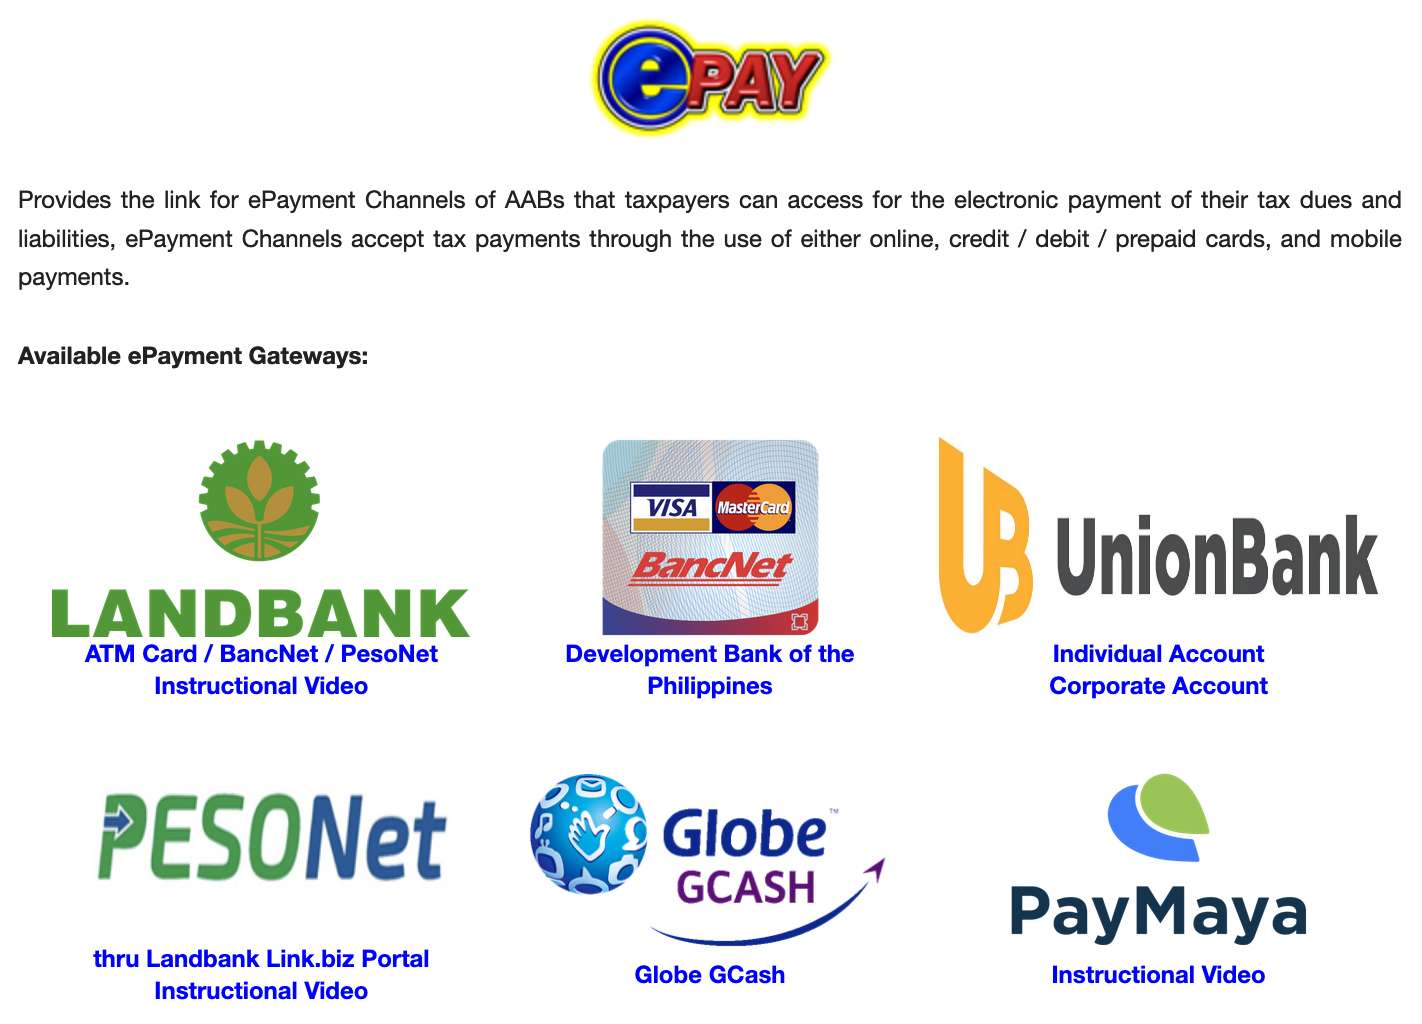 BIR payment centers